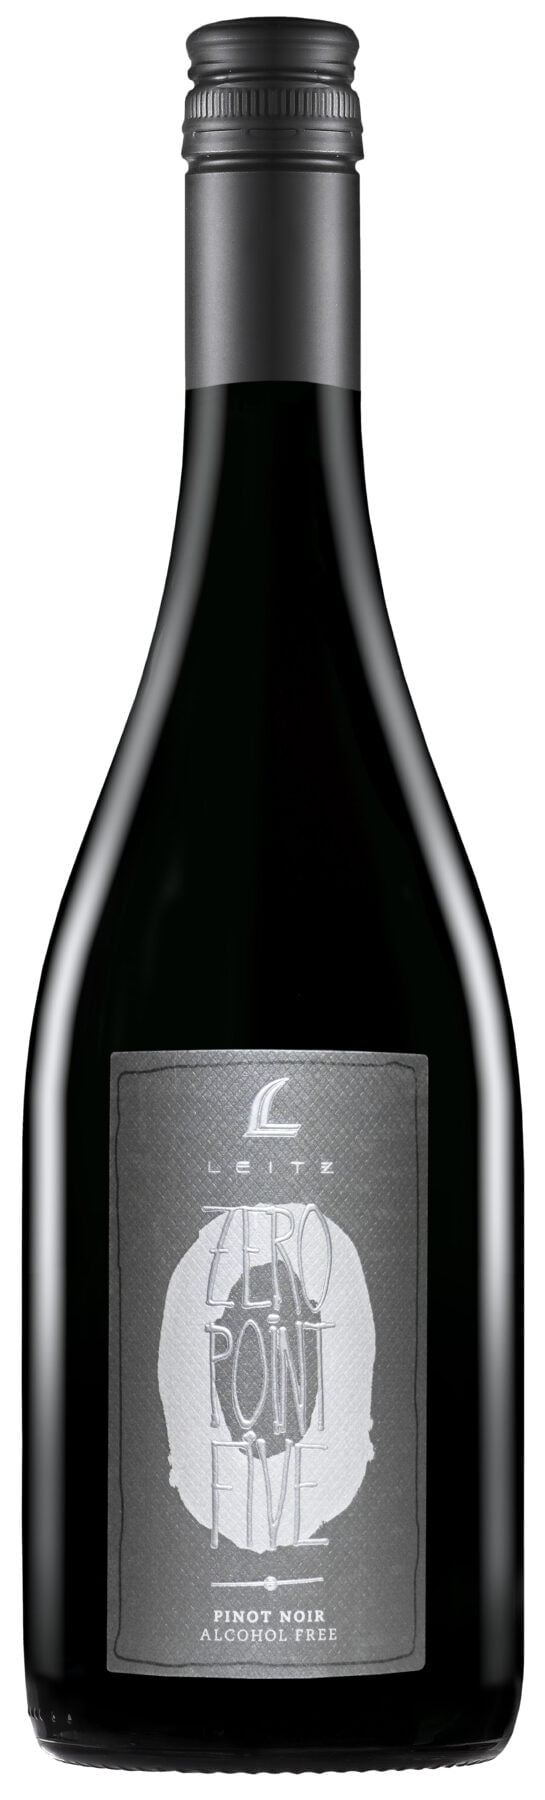 Grassroots Wine Weingut Leitz 'Zero Point Five' Pinot Noir (NA)